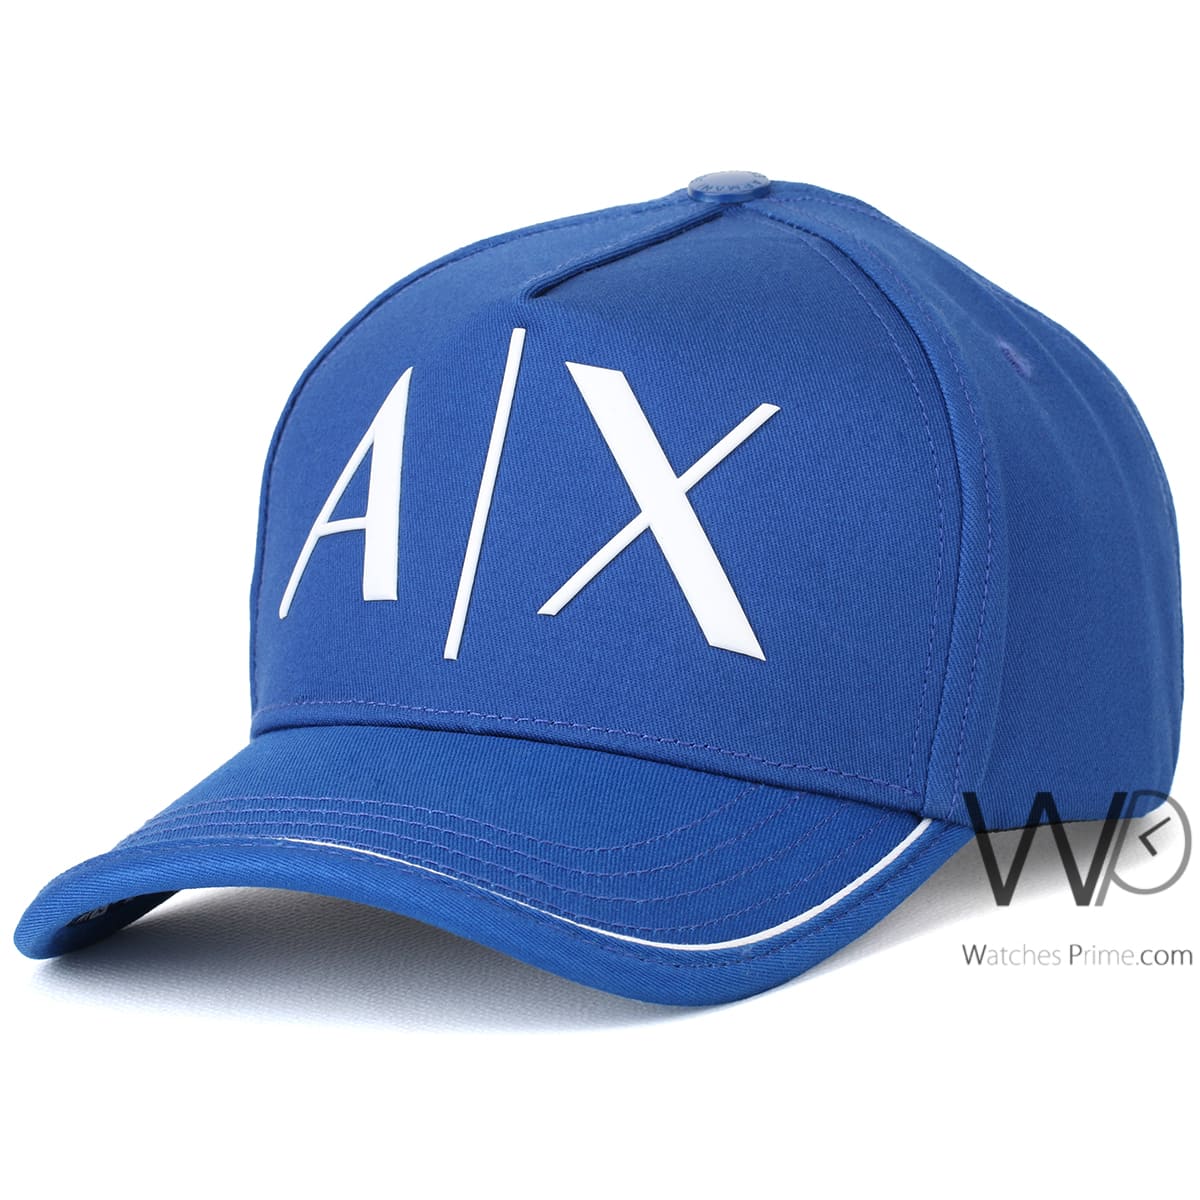 armani-exchange-baseball-cap-blue-cotton-ax-hat